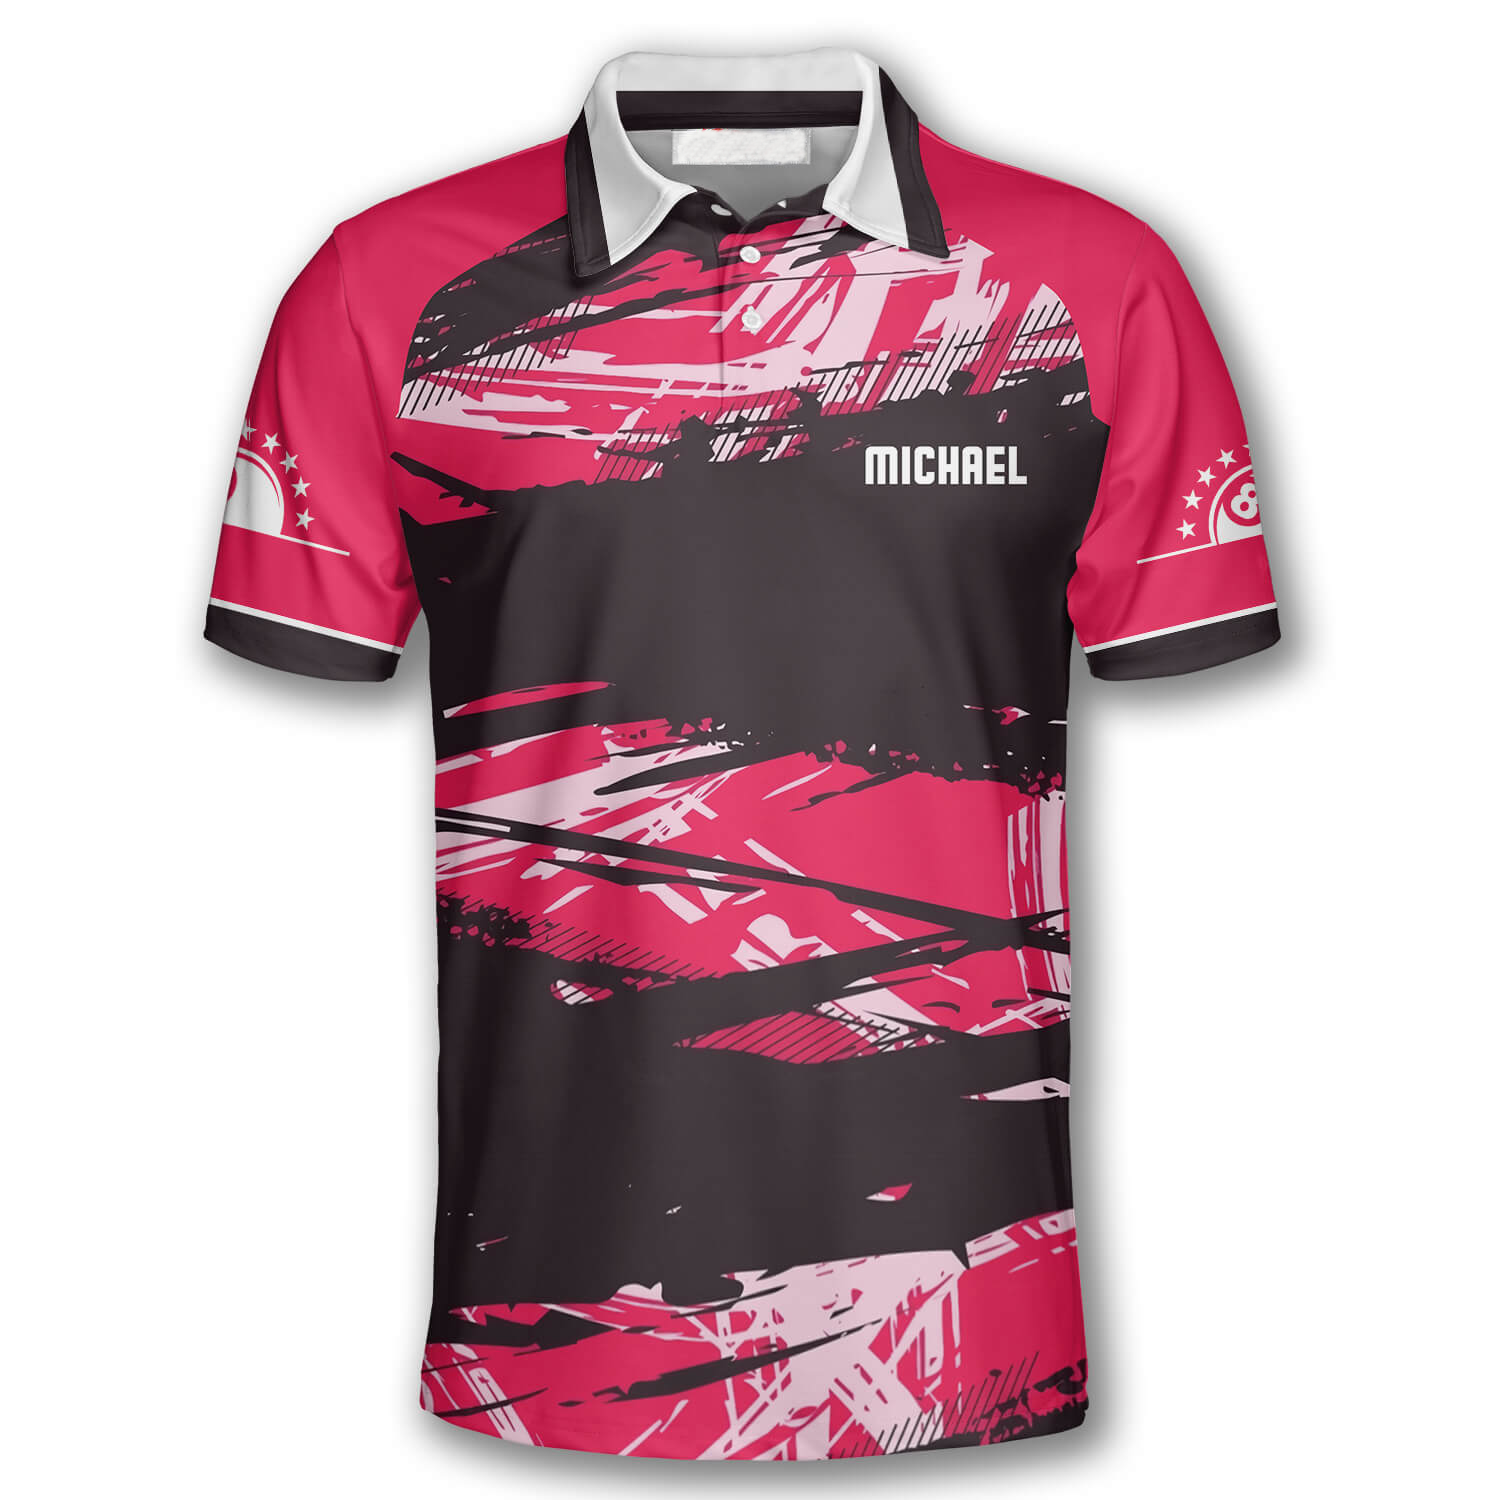 3D All Over Print Pink Grunge Custom Billiard Polo Shirts for Men/ Idea Cool Gift for Billiard Team